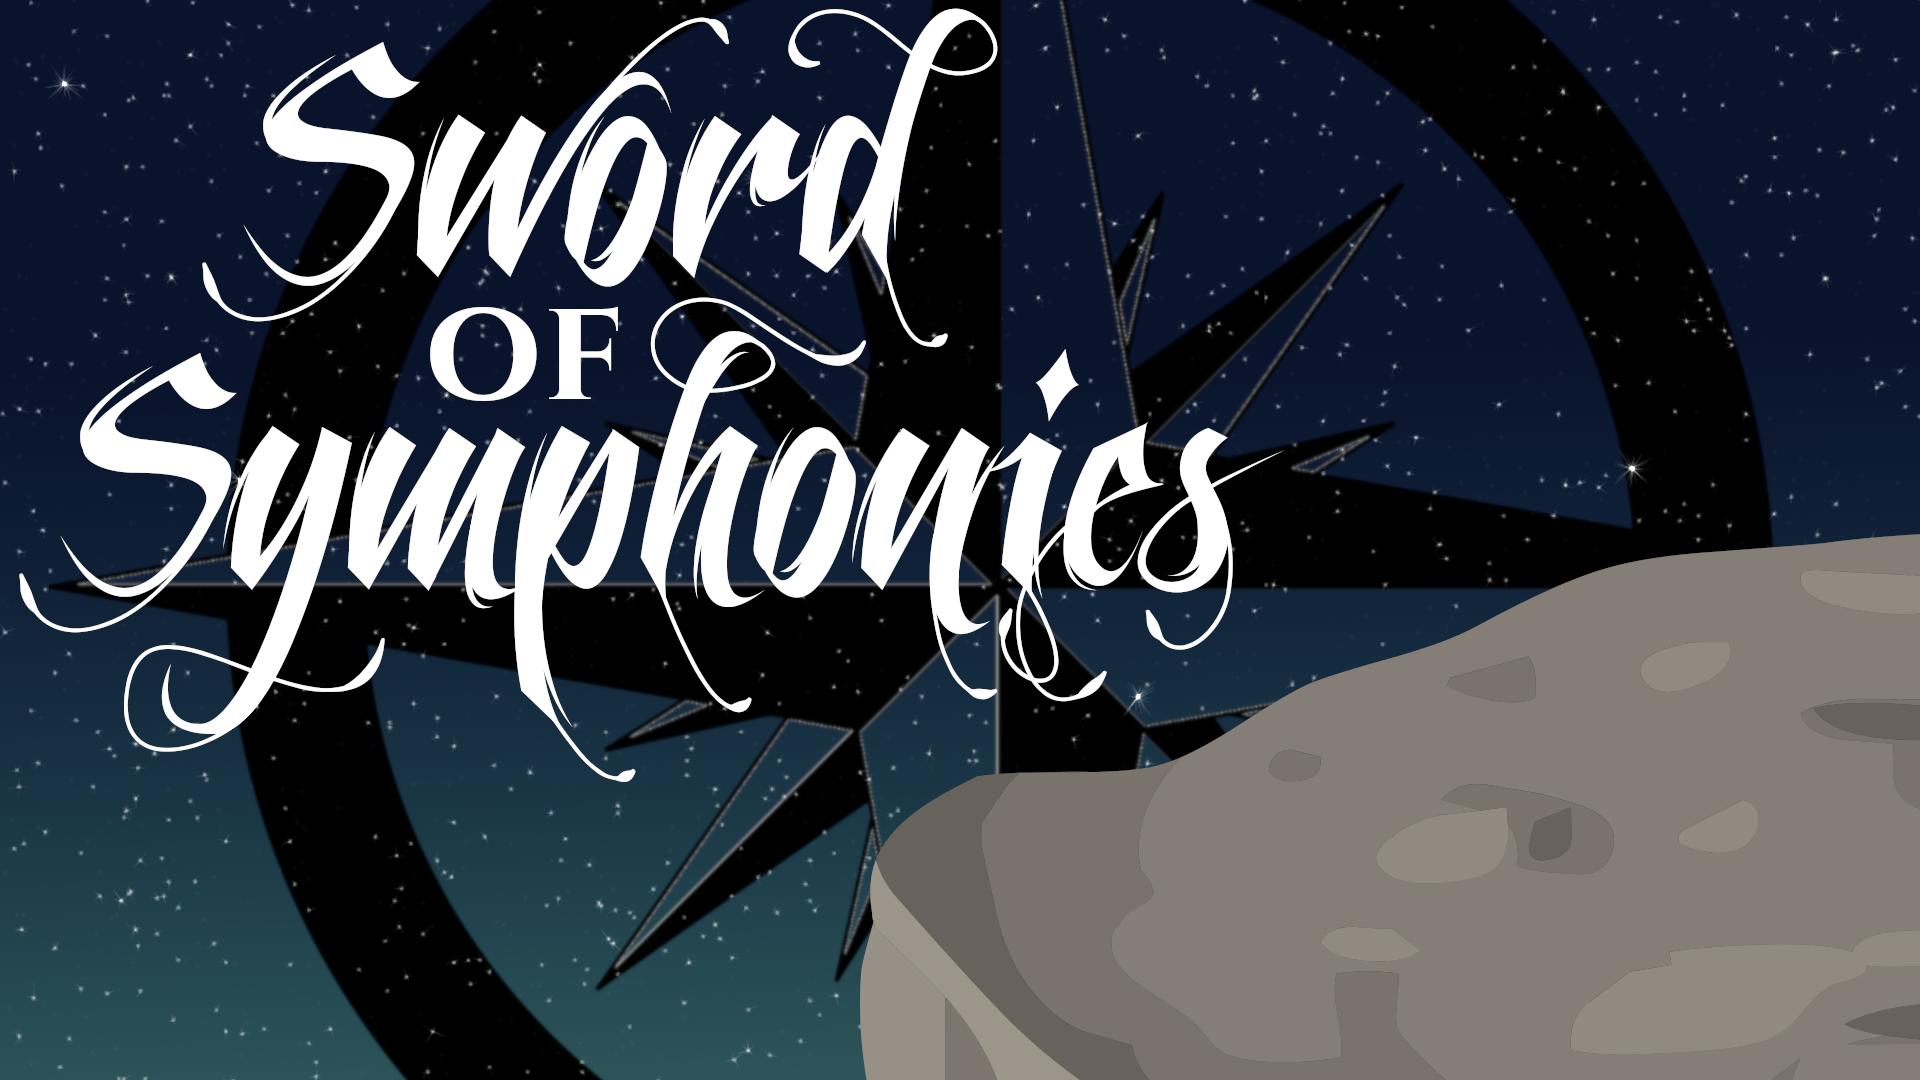 Sword of Symphonies